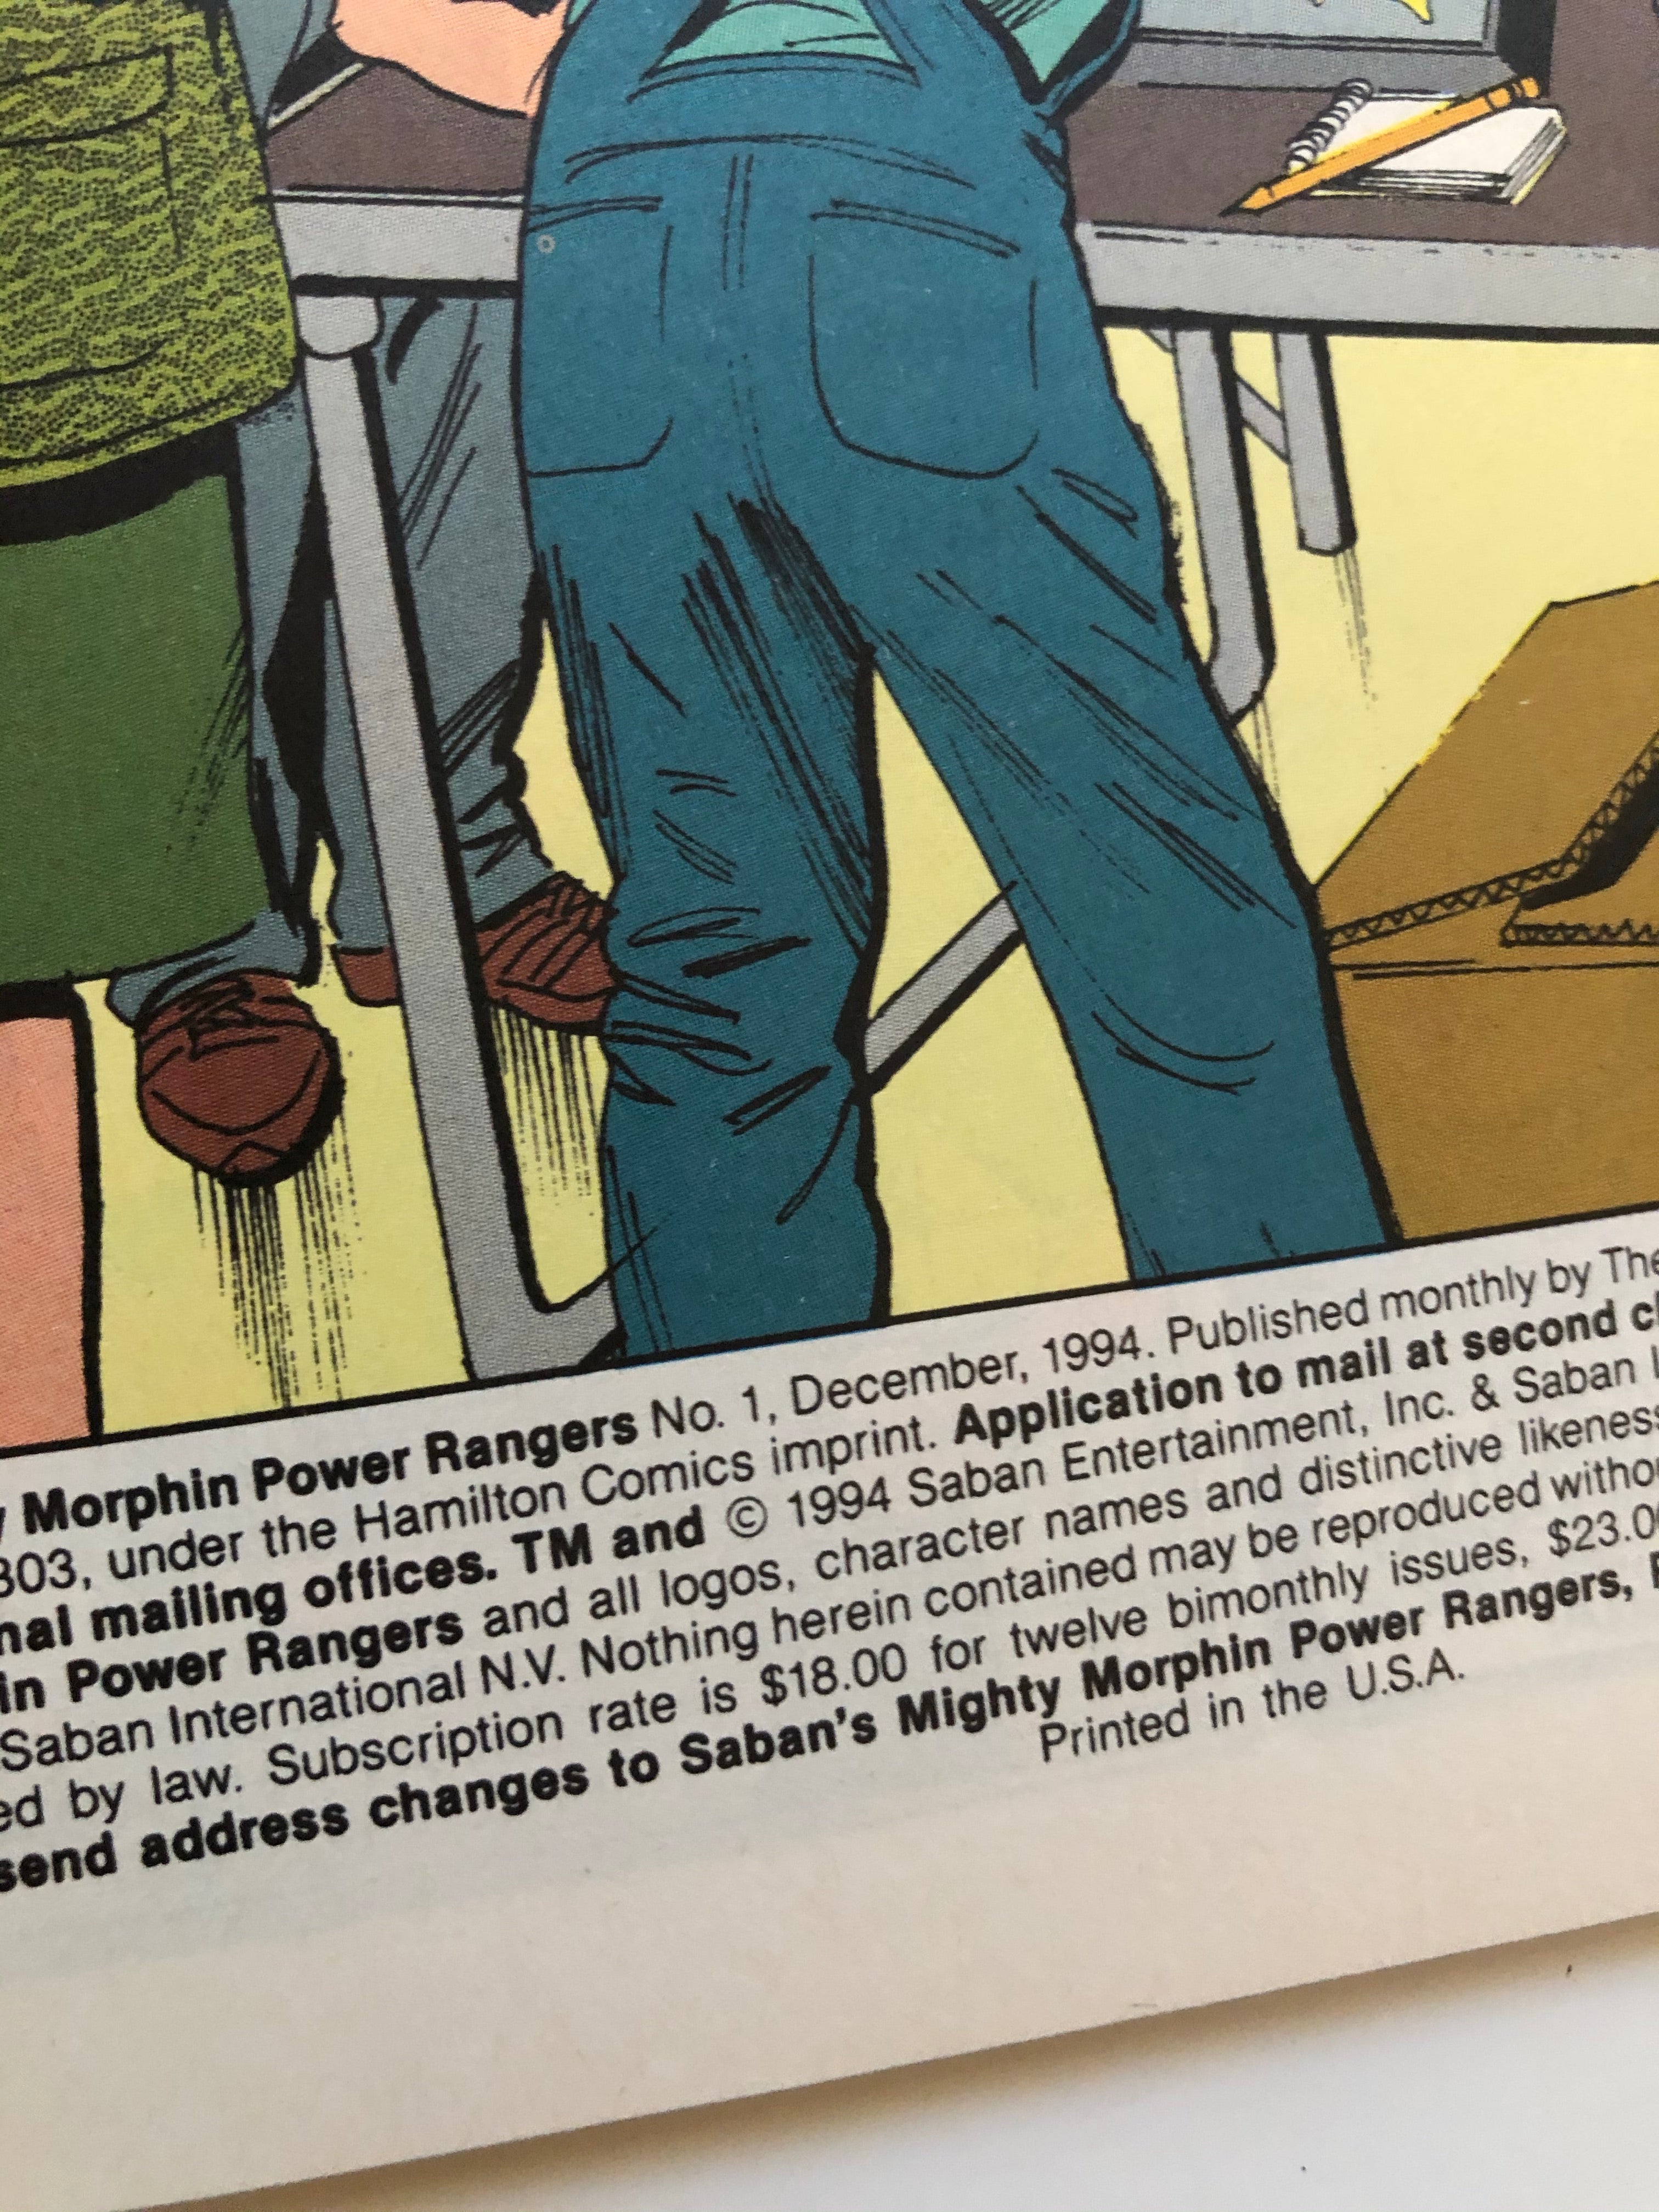 Mighty Morphin Power Rangers #1 comic book 1994